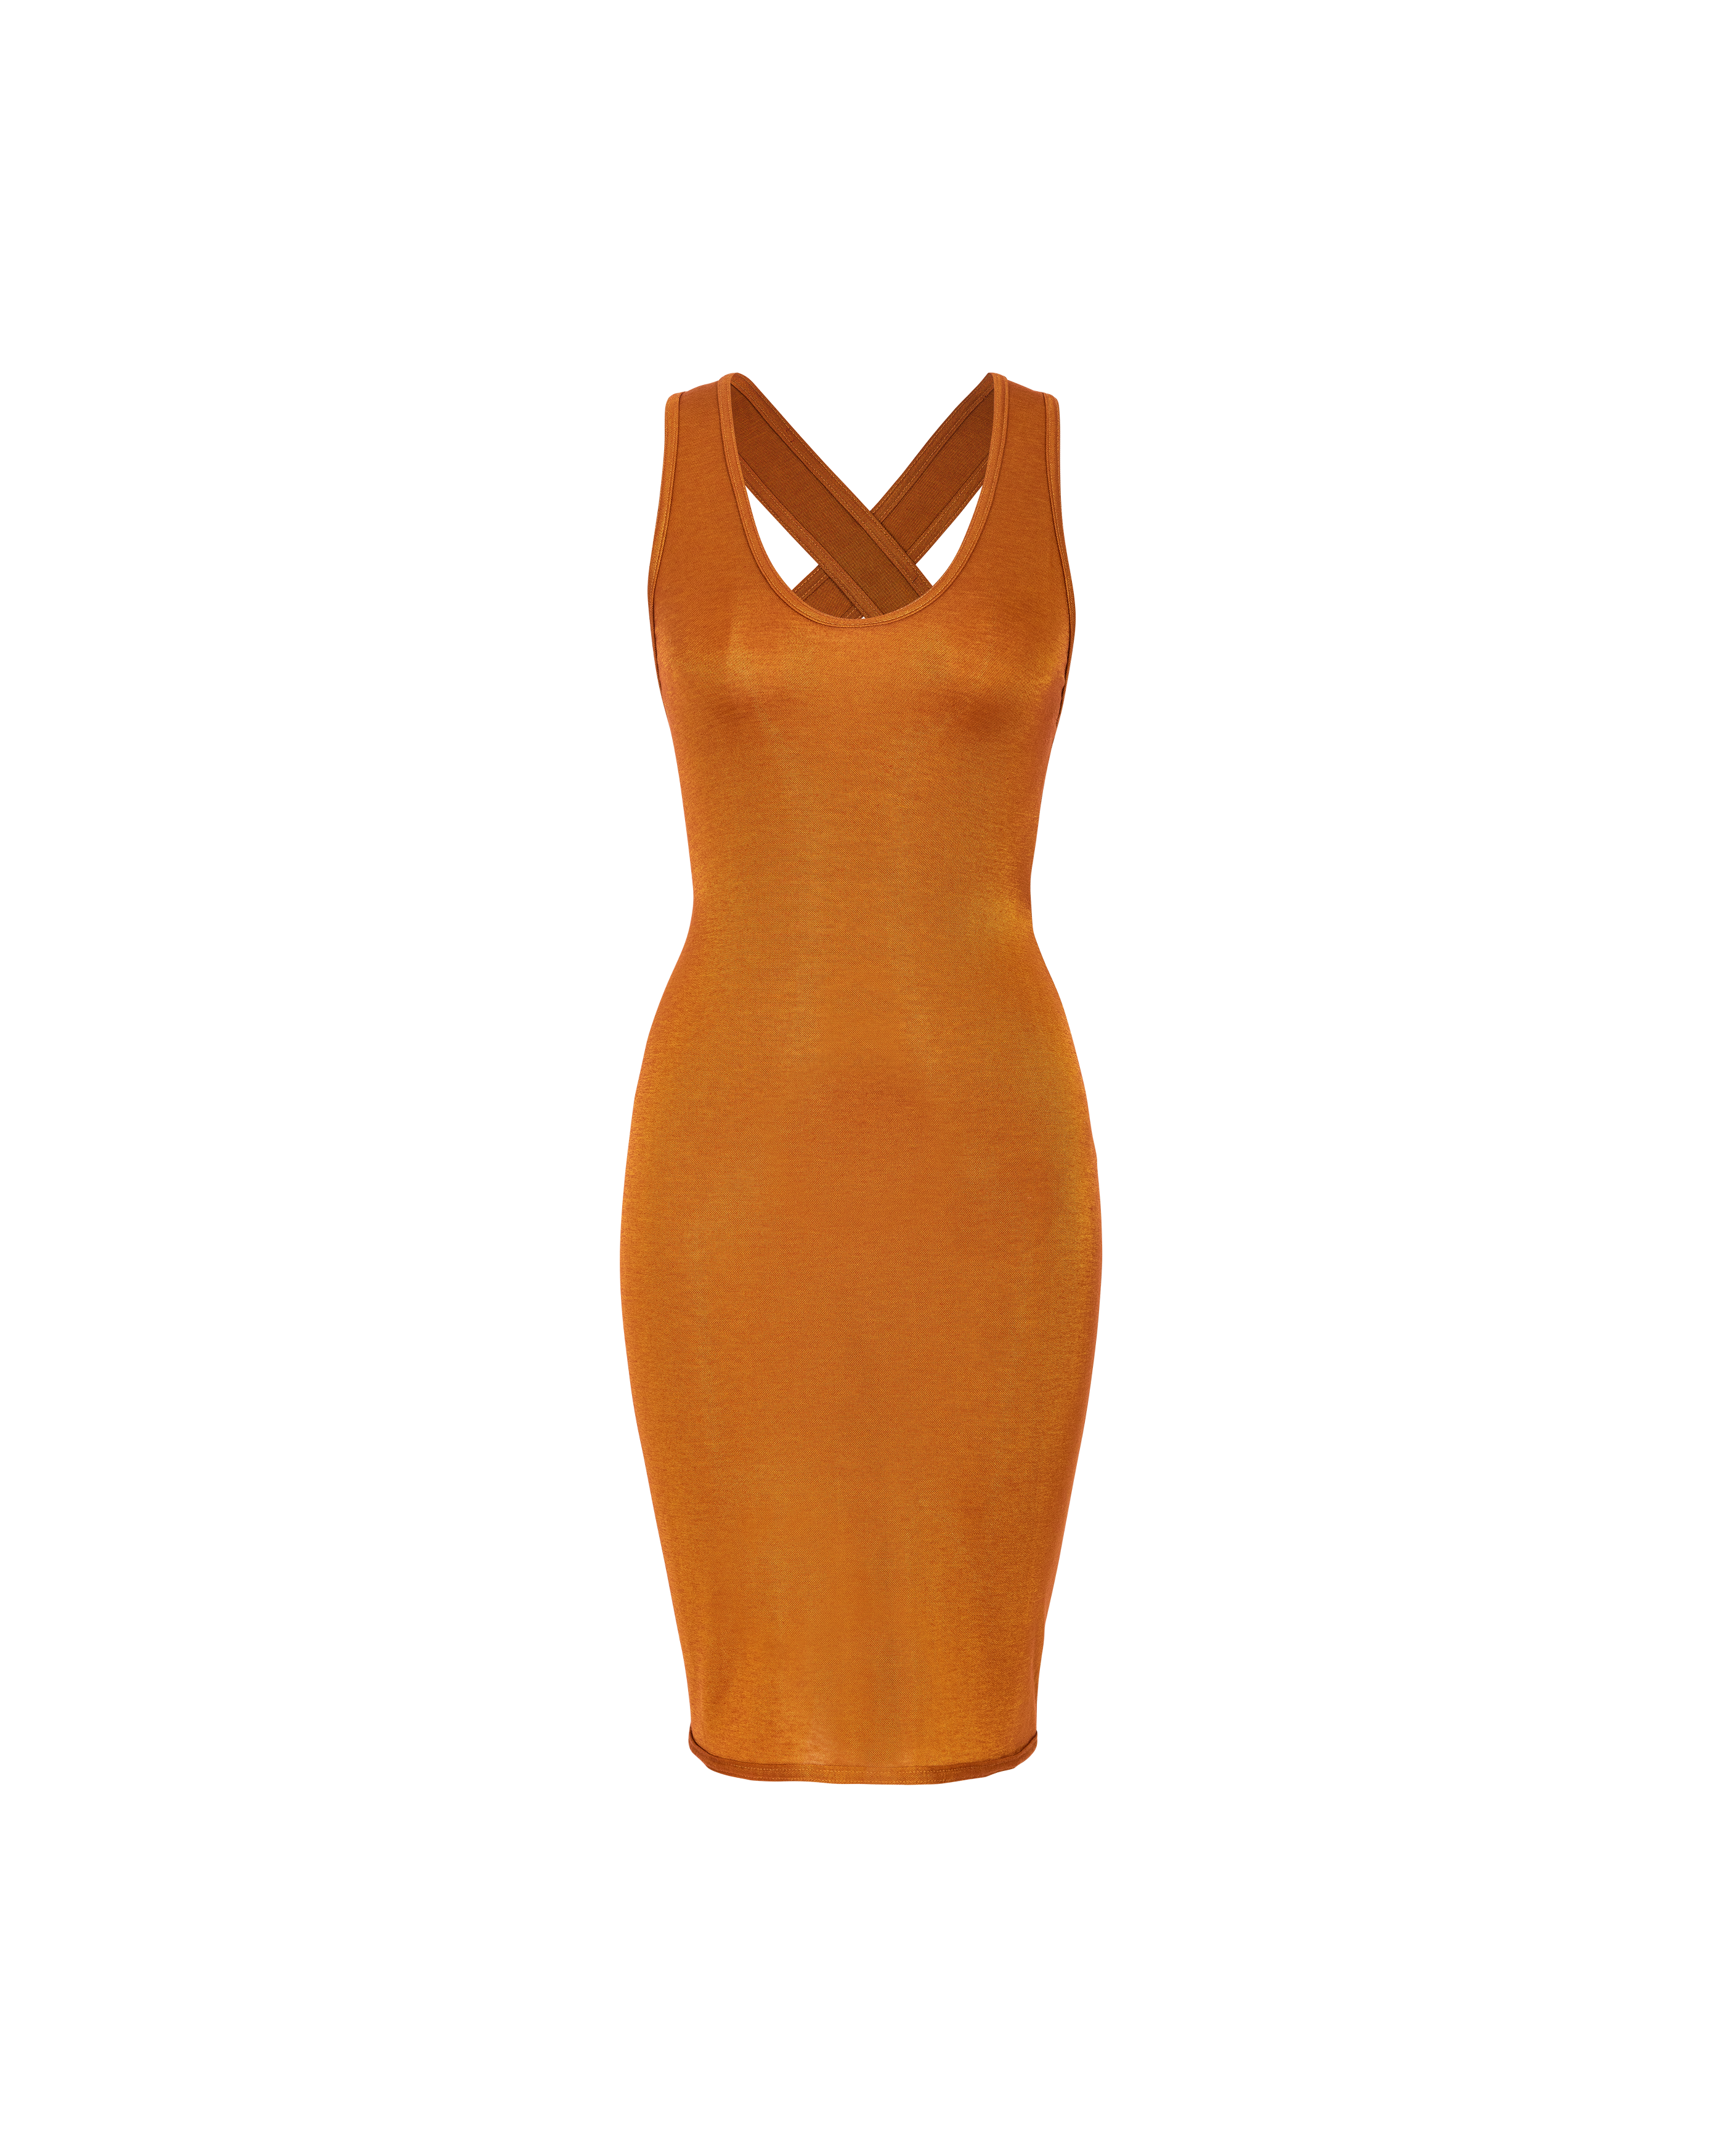 c. 1986 Orange Ochre Scoop Neck Sleeveless Dress